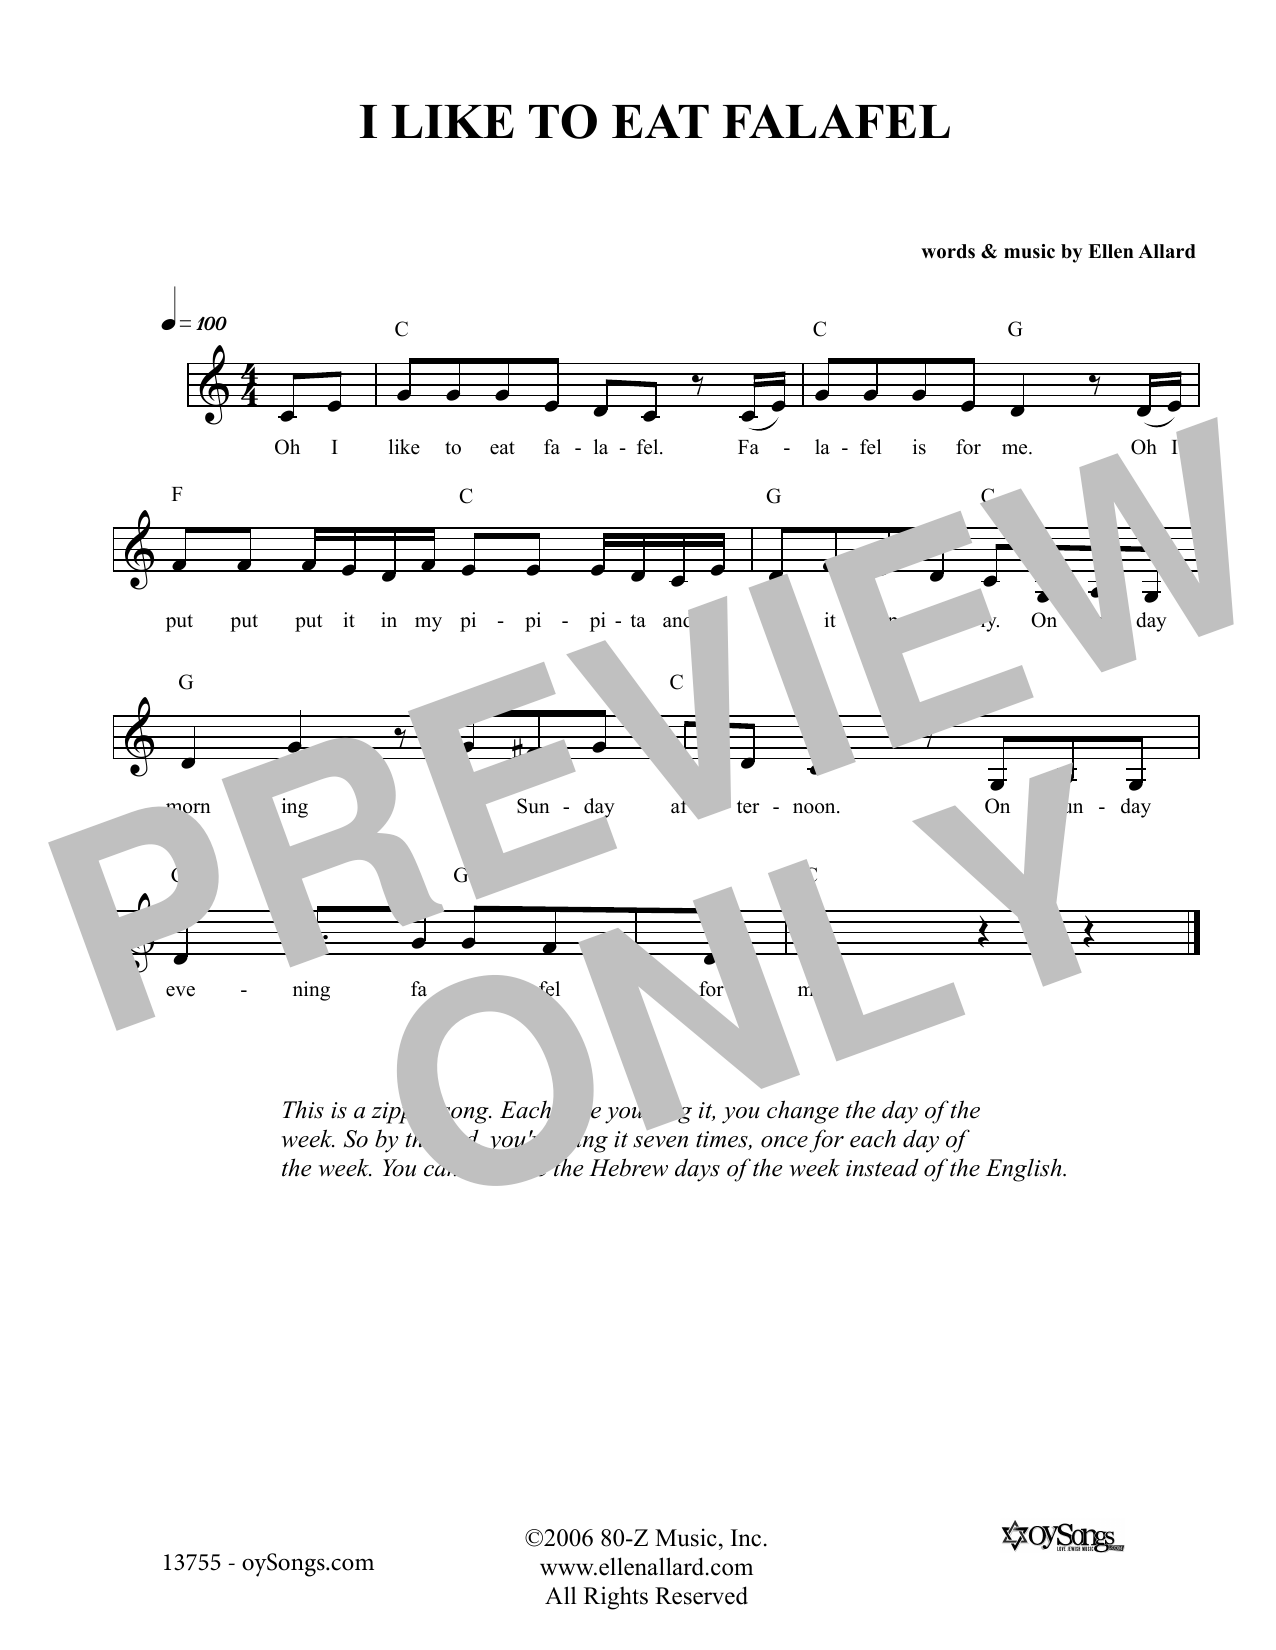 Download Ellen Allard I Like To Eat Felafel Sheet Music and learn how to play Melody Line, Lyrics & Chords PDF digital score in minutes